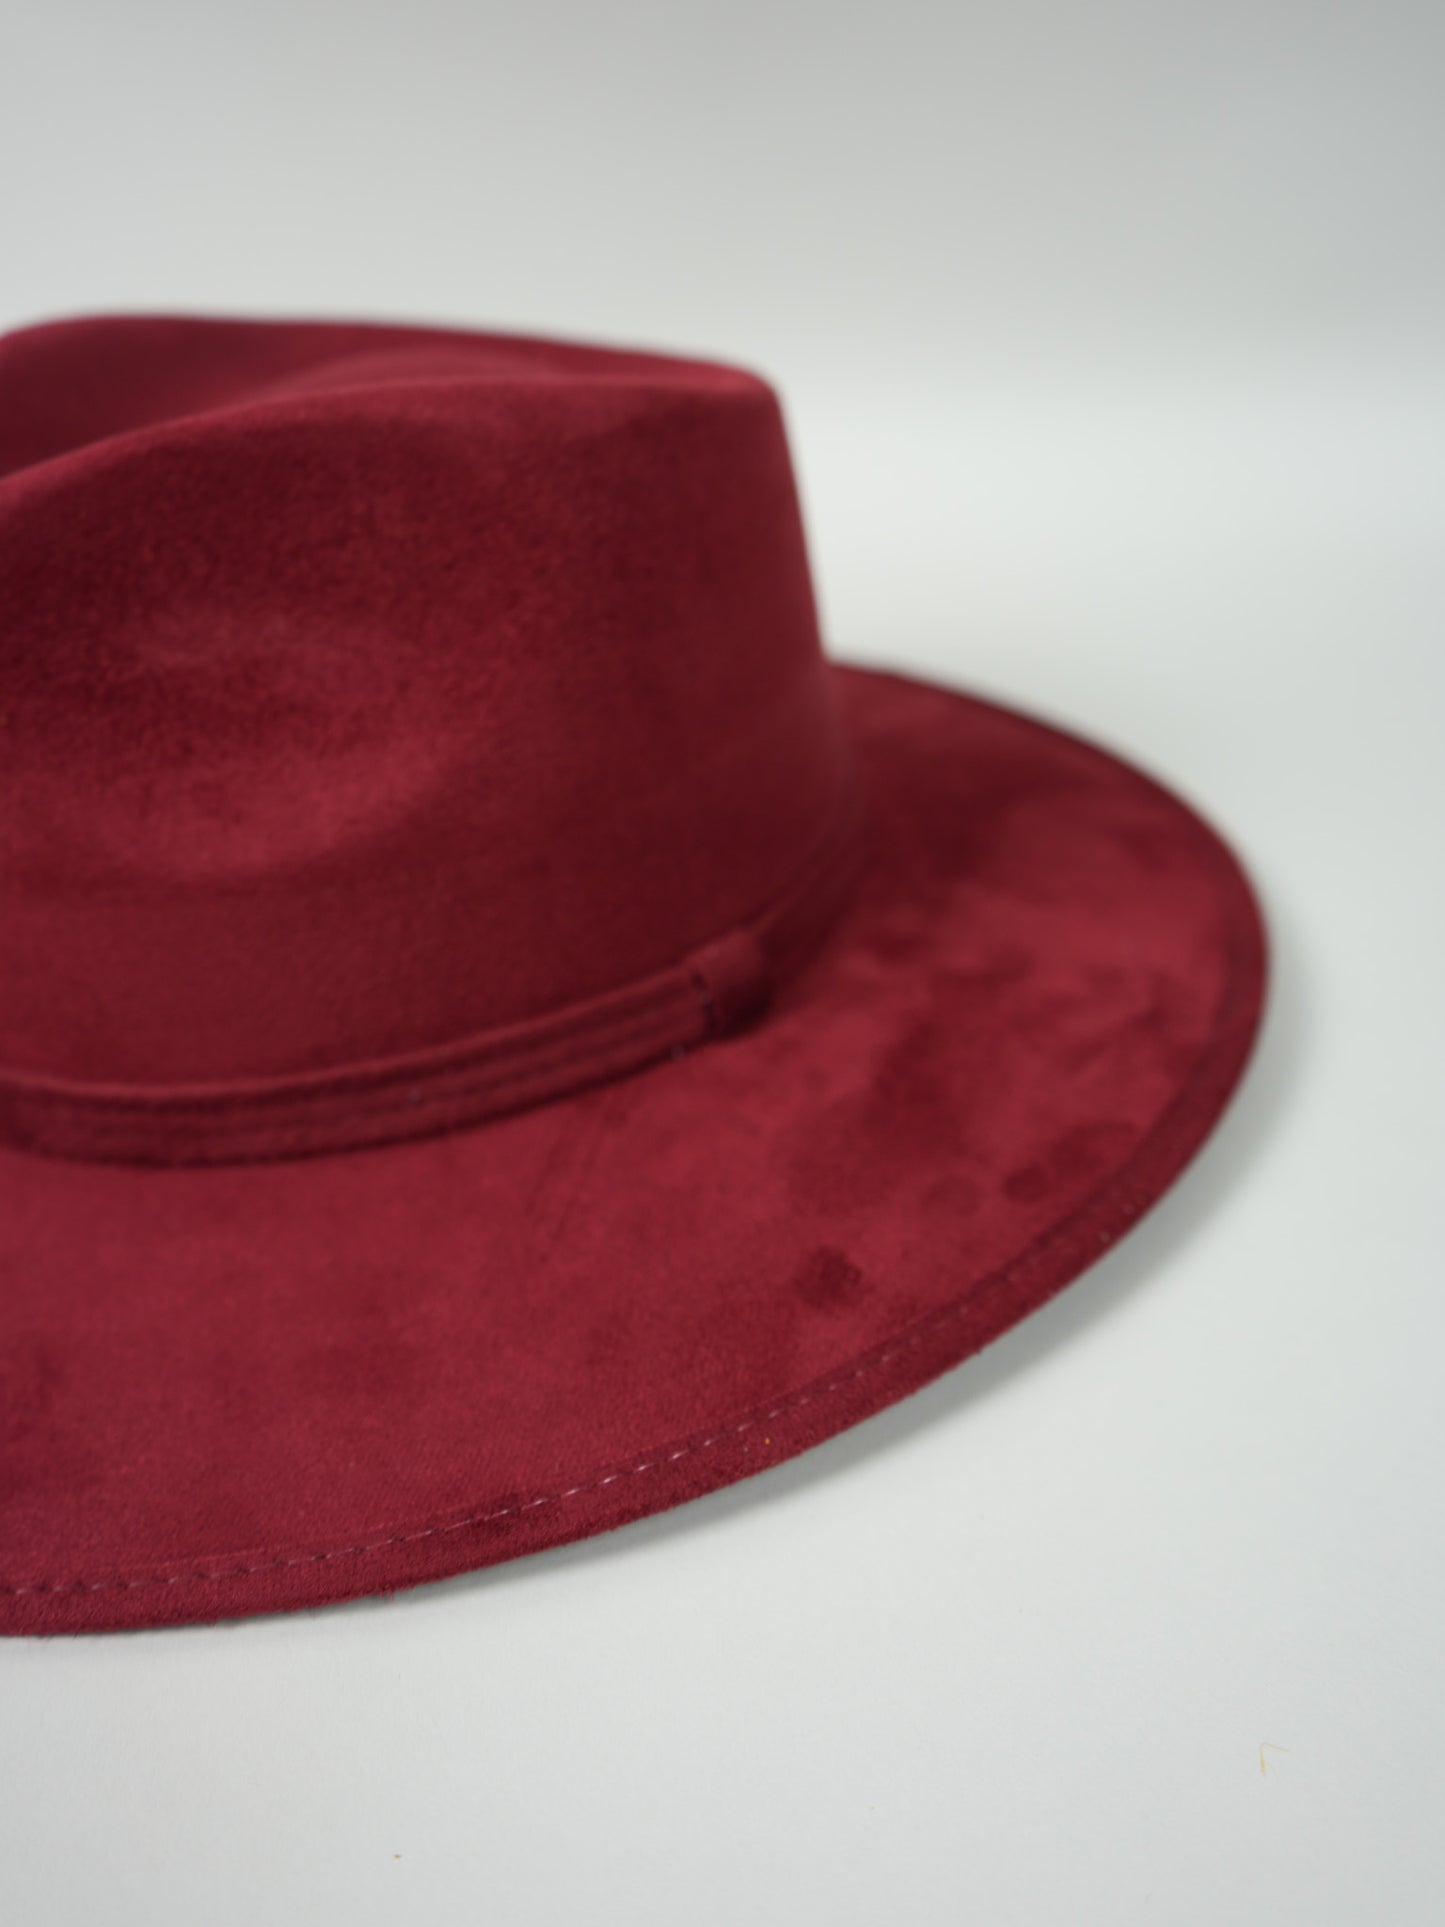 Vegan Suede Rancher Hat - Burgundy Red